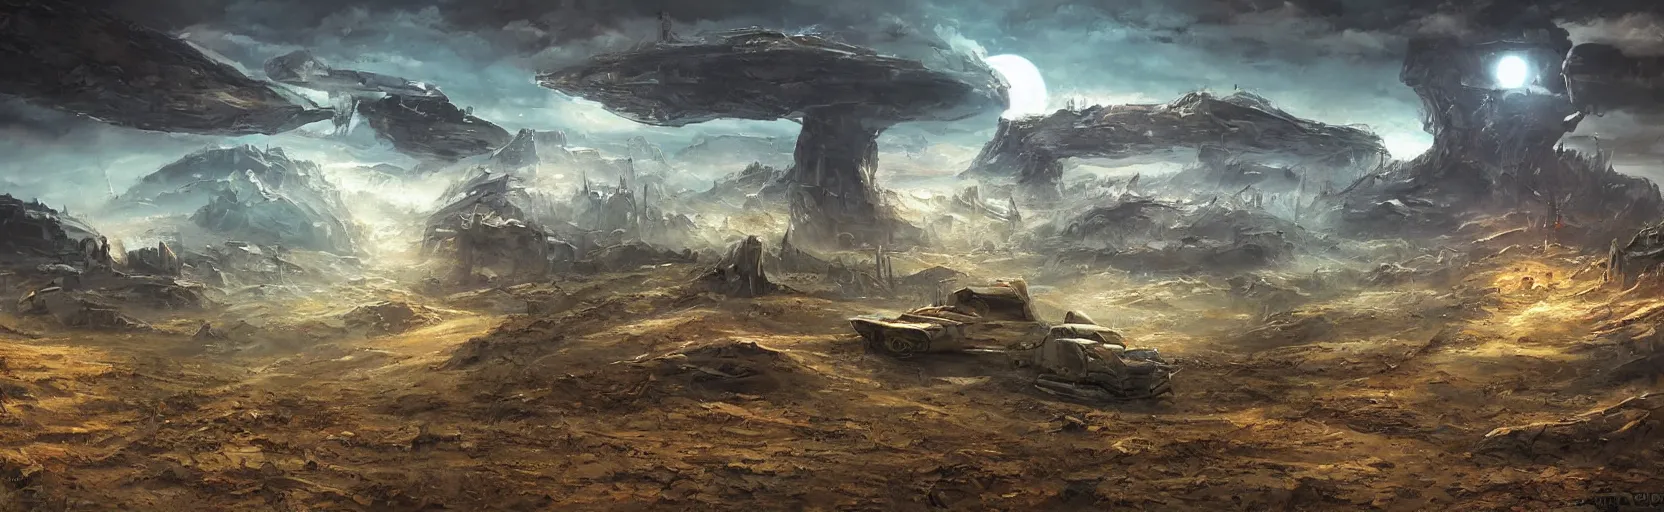 Image similar to retro sci-fi landscape by Rudolph Belarski